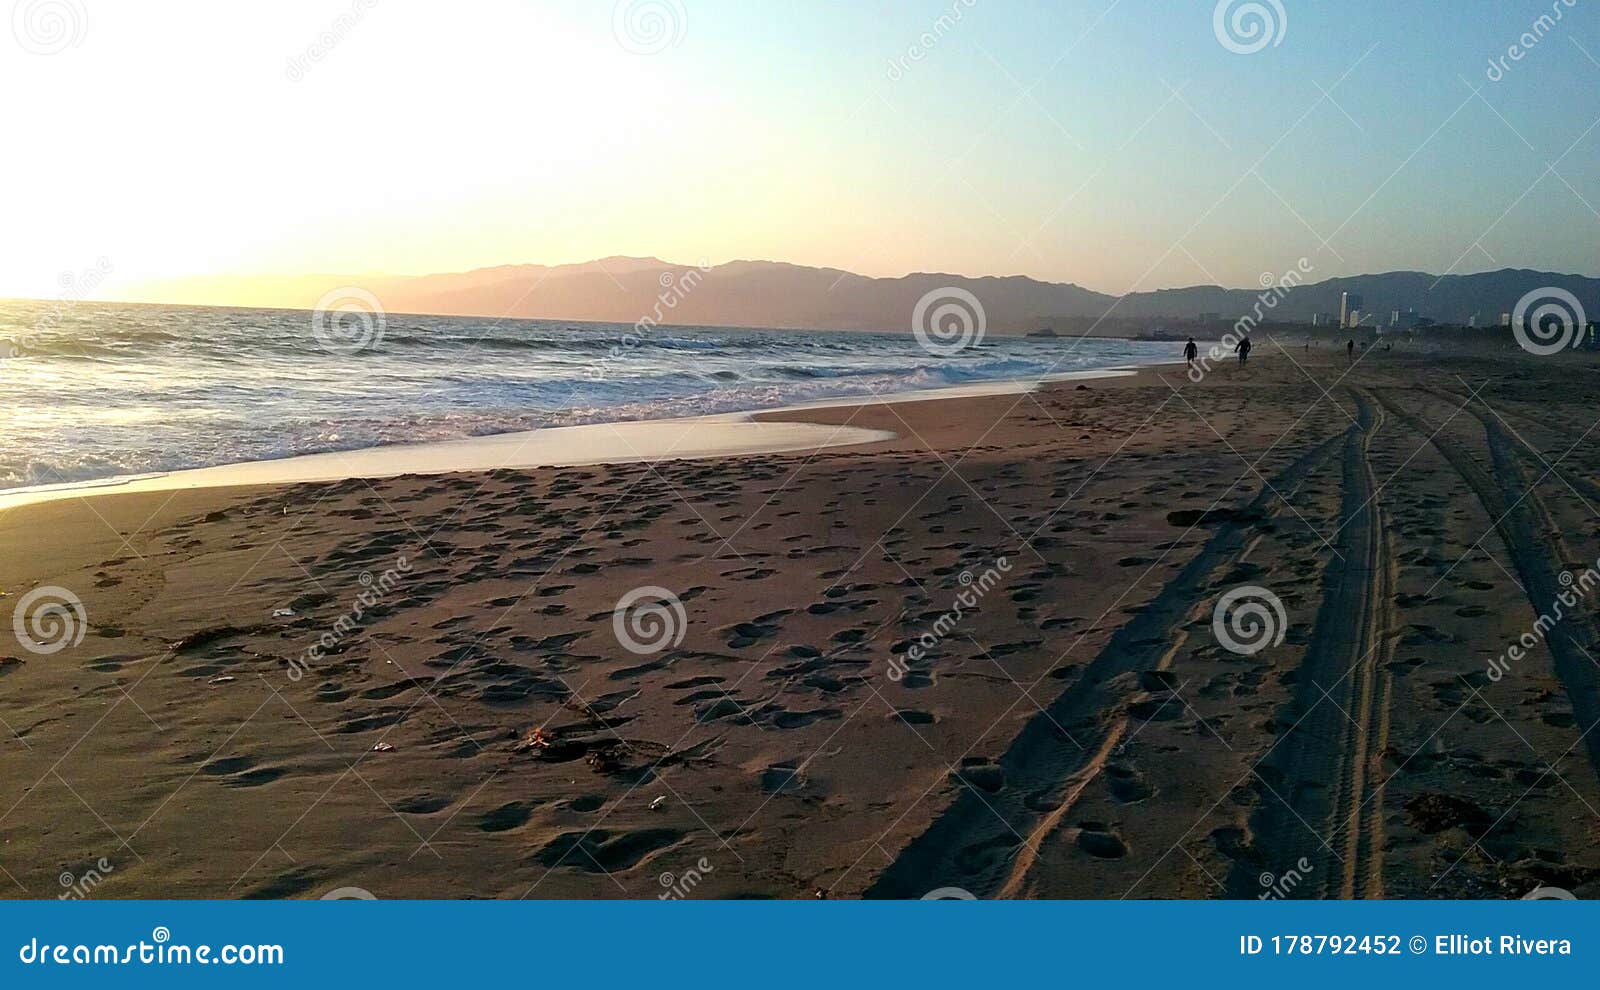 empty beach at venice, california